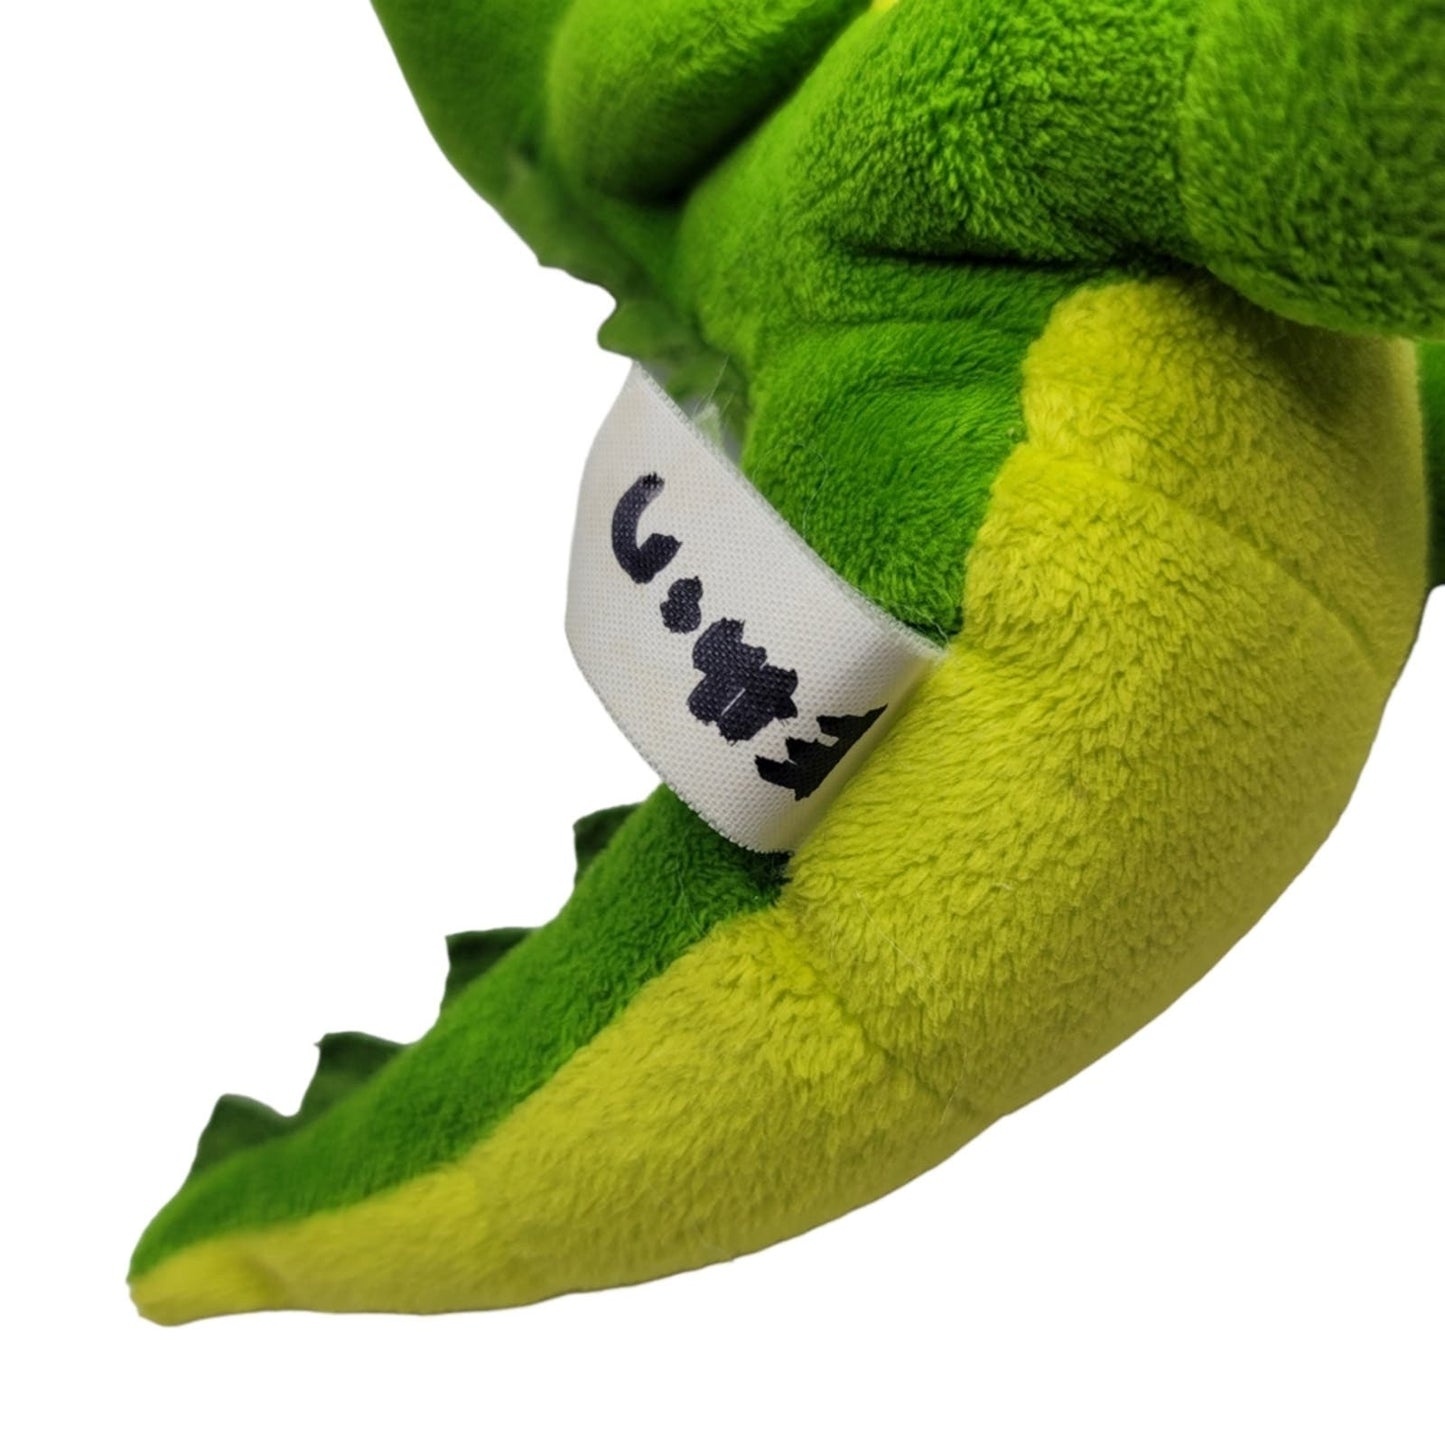 Disney Jr. Jake Neverland Pirates Plush Tic Toc Crocodile 9” Peter Pan Stuffed